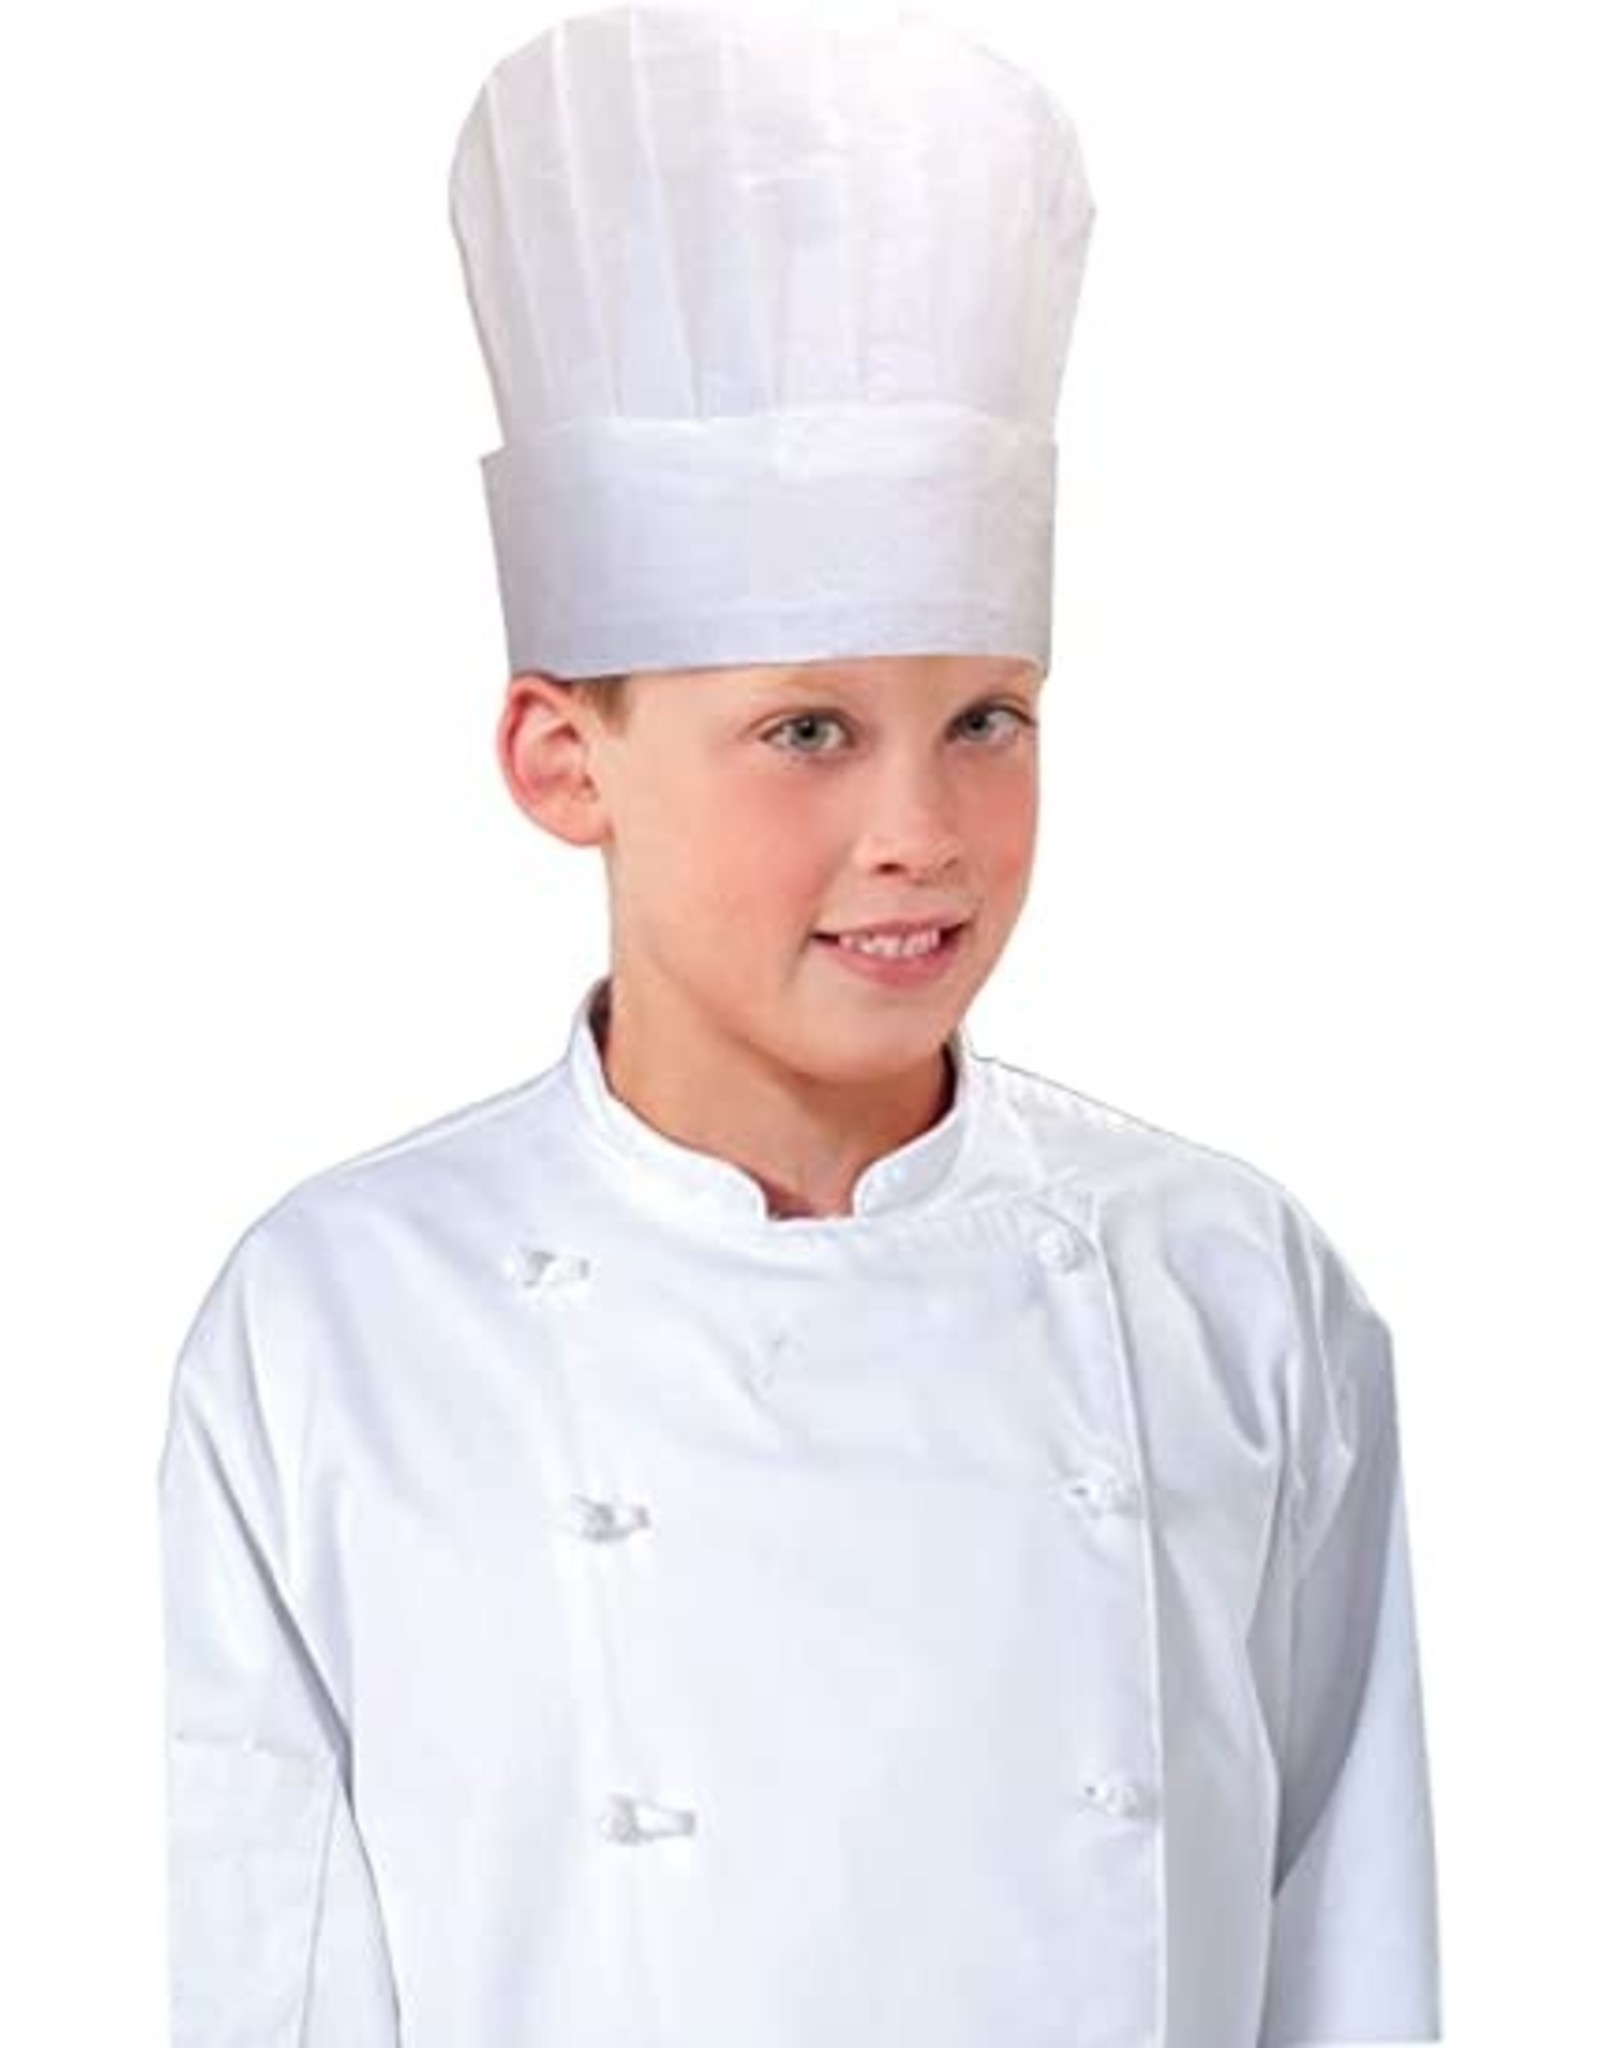 Forum Novelties Inc. Children's Paper Chef Hat